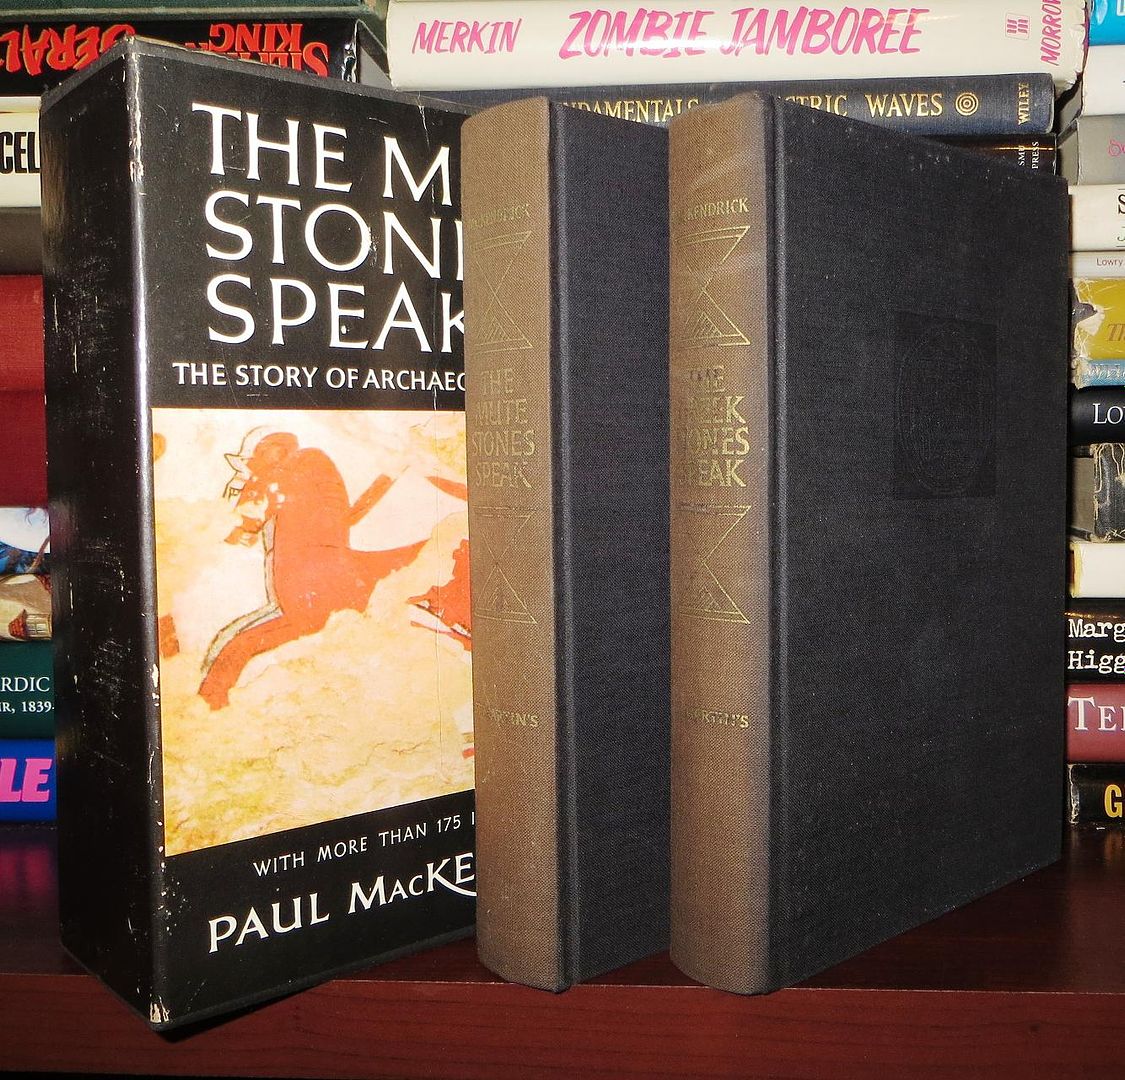 MACKENDRICK, PAUL - The Greek Stones Speak the Story of Archaeology in Greek Lands ( Complete in Two Volume Set )